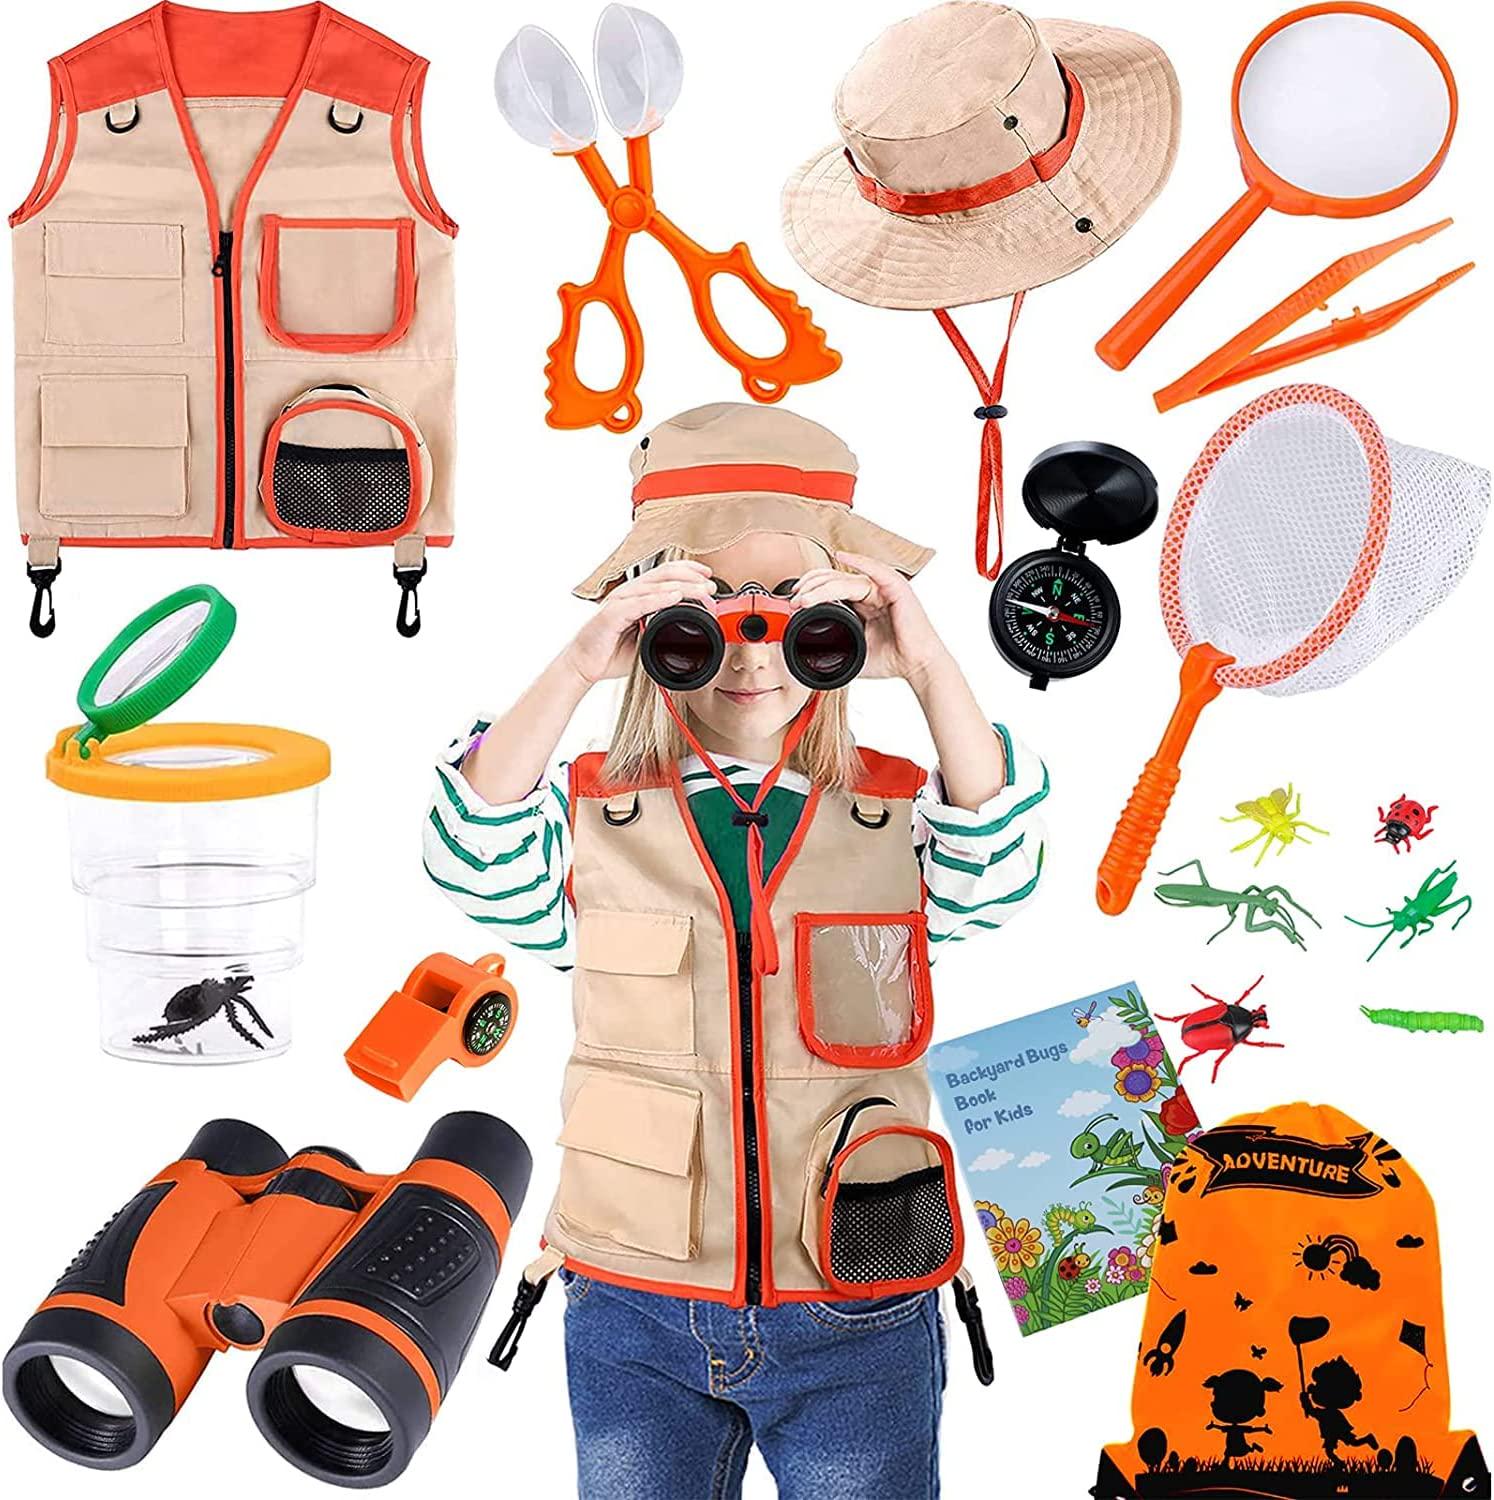 TEPSMIGO, Kids Explorer Kit, 11 Pcs Outdoor Exploration Kit with Binoculars, Costume Vest, Safari Hat, Bag, Hand-Crank Flashlight, Magnifying Glass and Whistle, Camping, Educational Toy Gift for Boys and Girls